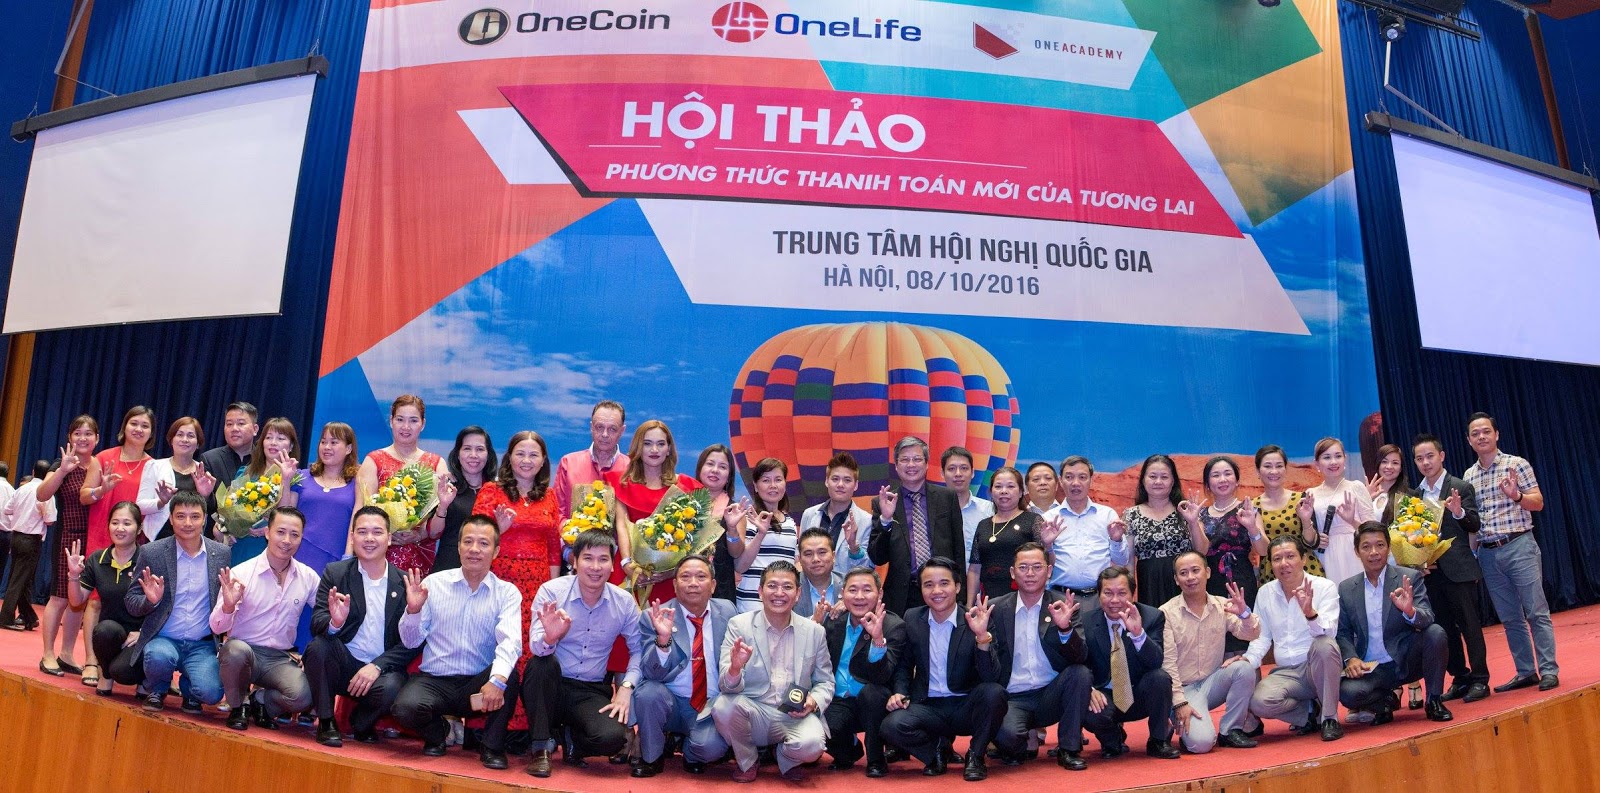 Ponzi-like OneCoin trading scheme swindles many in Vietnam